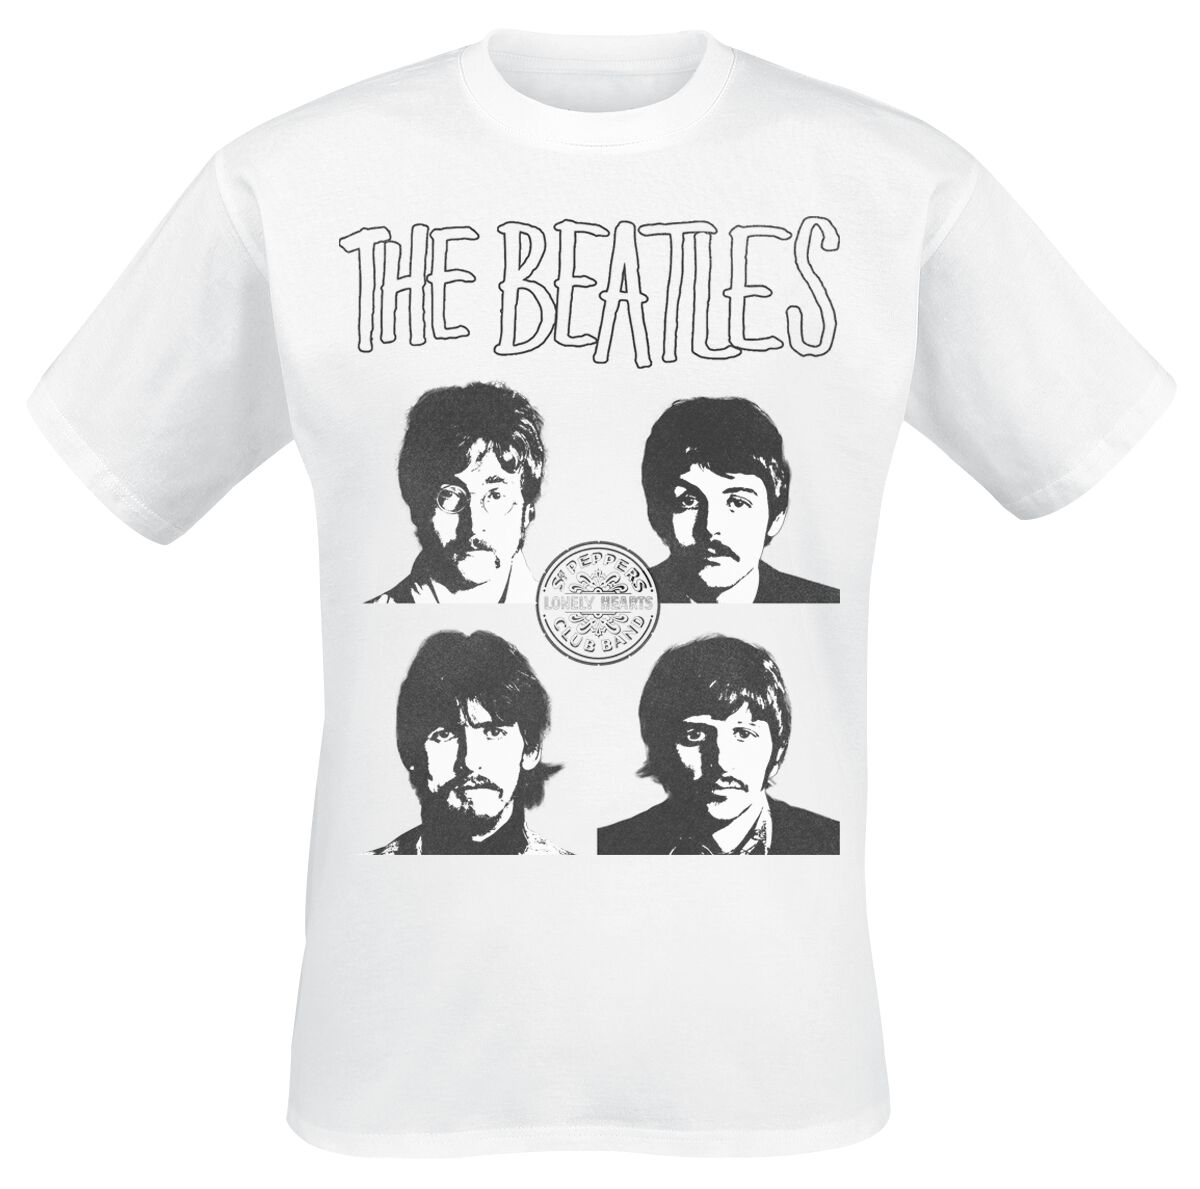 The Beatles T-Shirt - Sgt. Peppers Portrais - S bis 3XL - für Männer - Größe M - weiß  - Lizenziertes Merchandise!